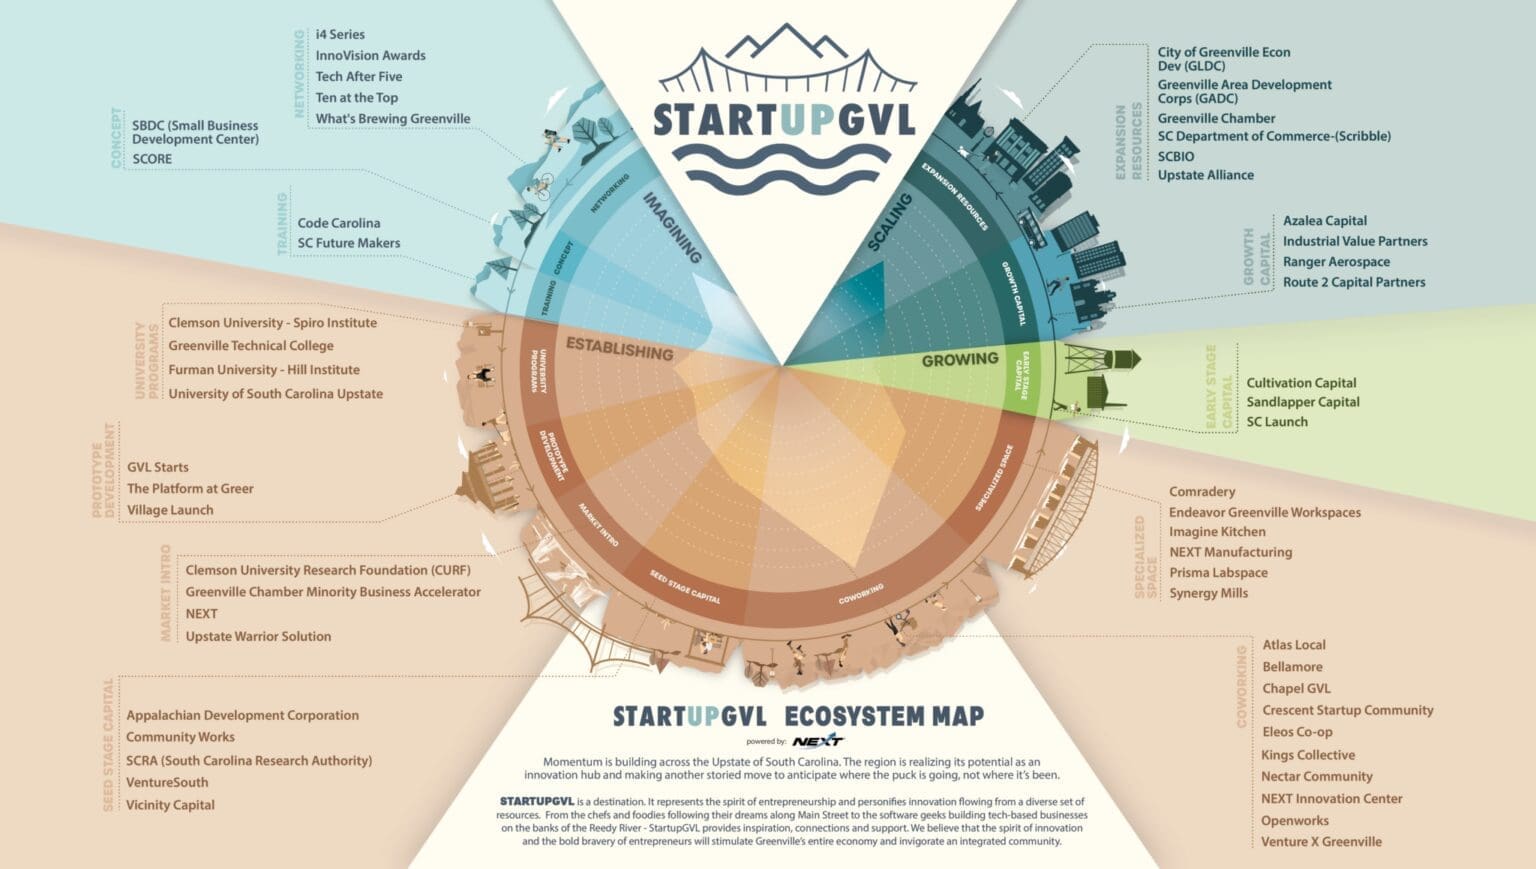 StartupGVL ecosystem map